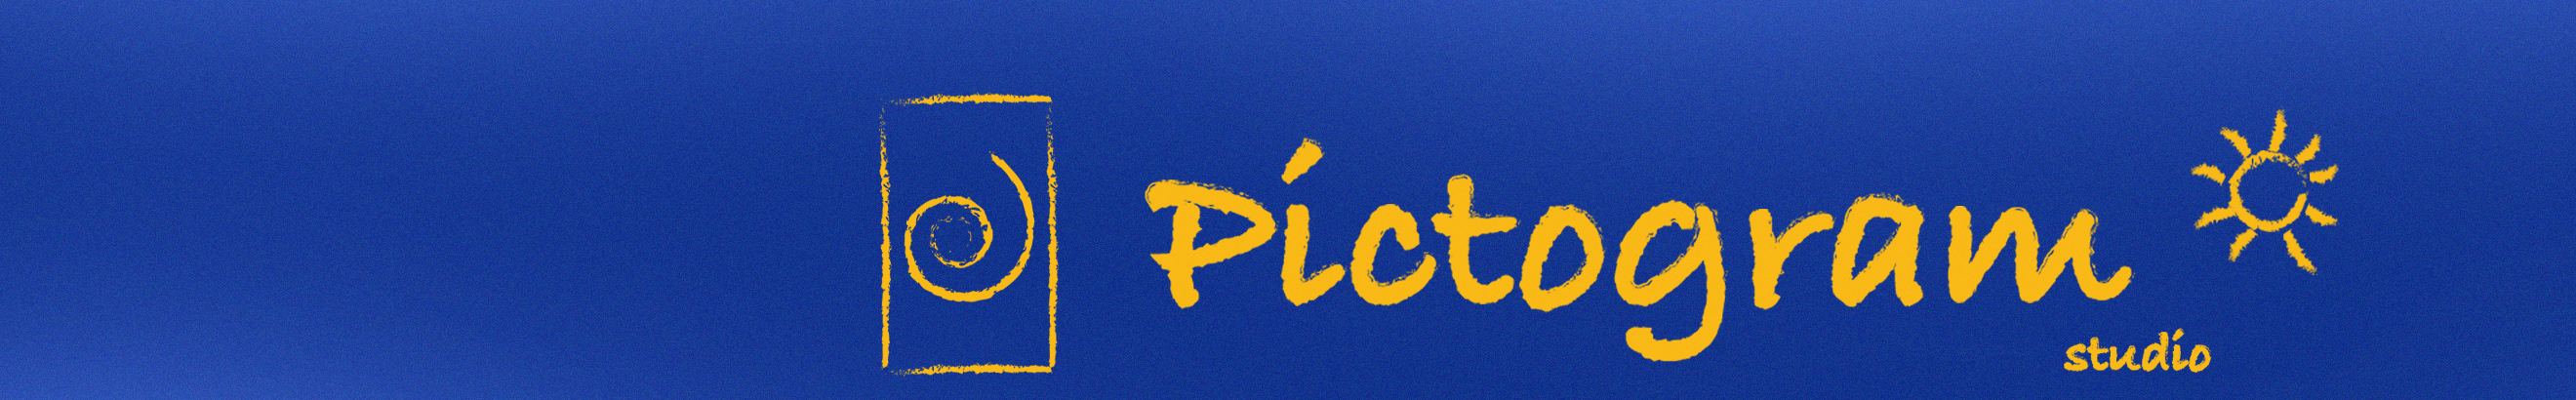 Pictogram Studio's profile banner